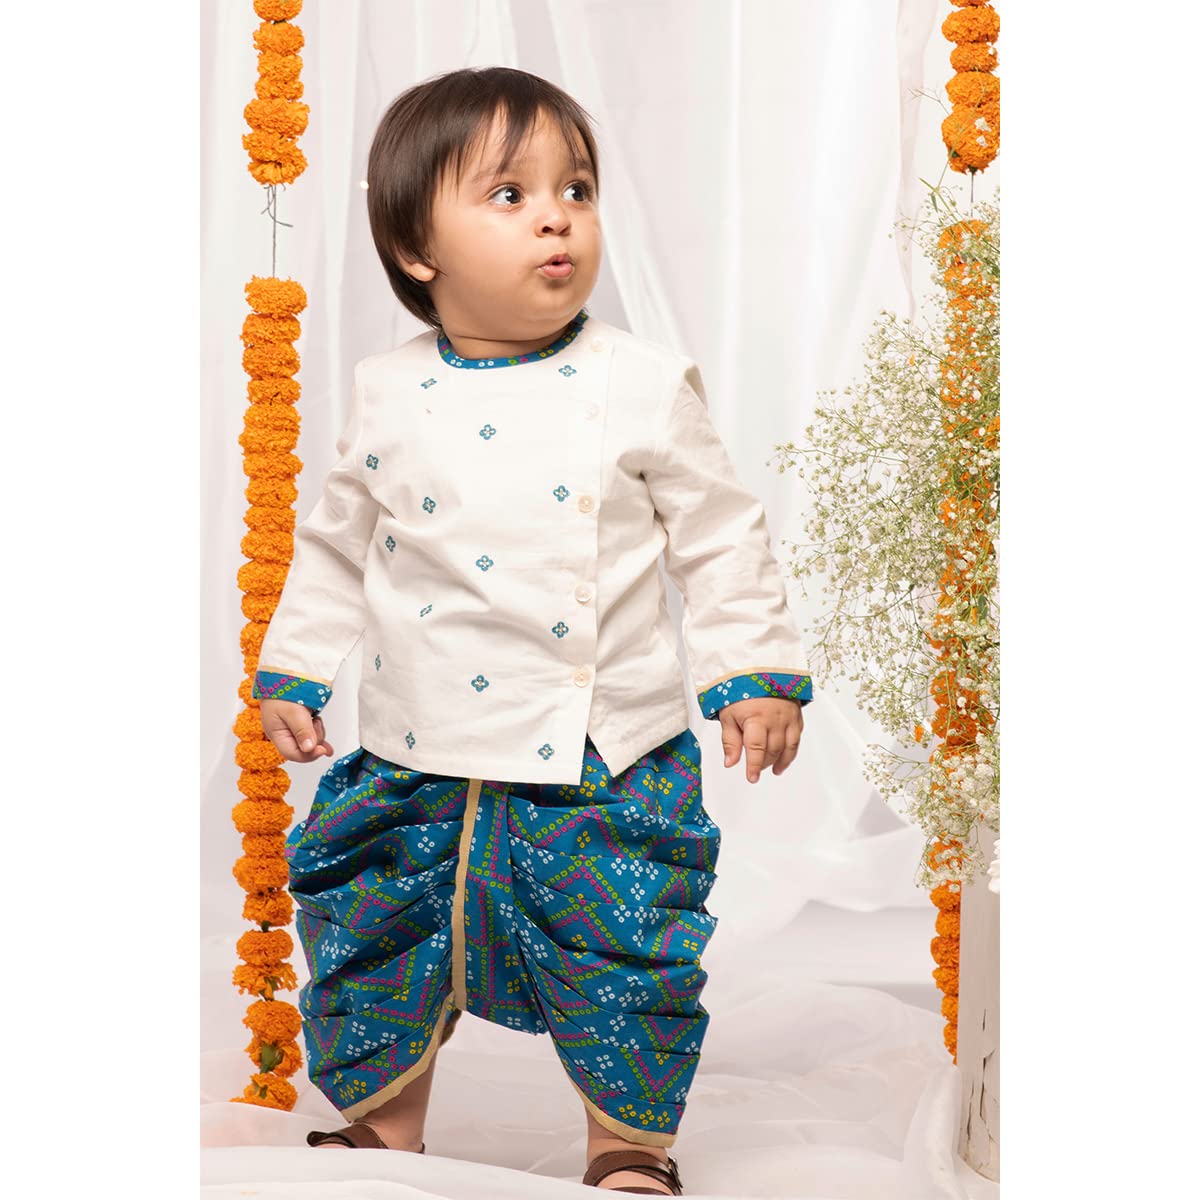 Designerdarji Indian Kids Kurta Pajama Set for Boys New Born Babys Gift  Items Kids Wear Indian Outfits - Etsy